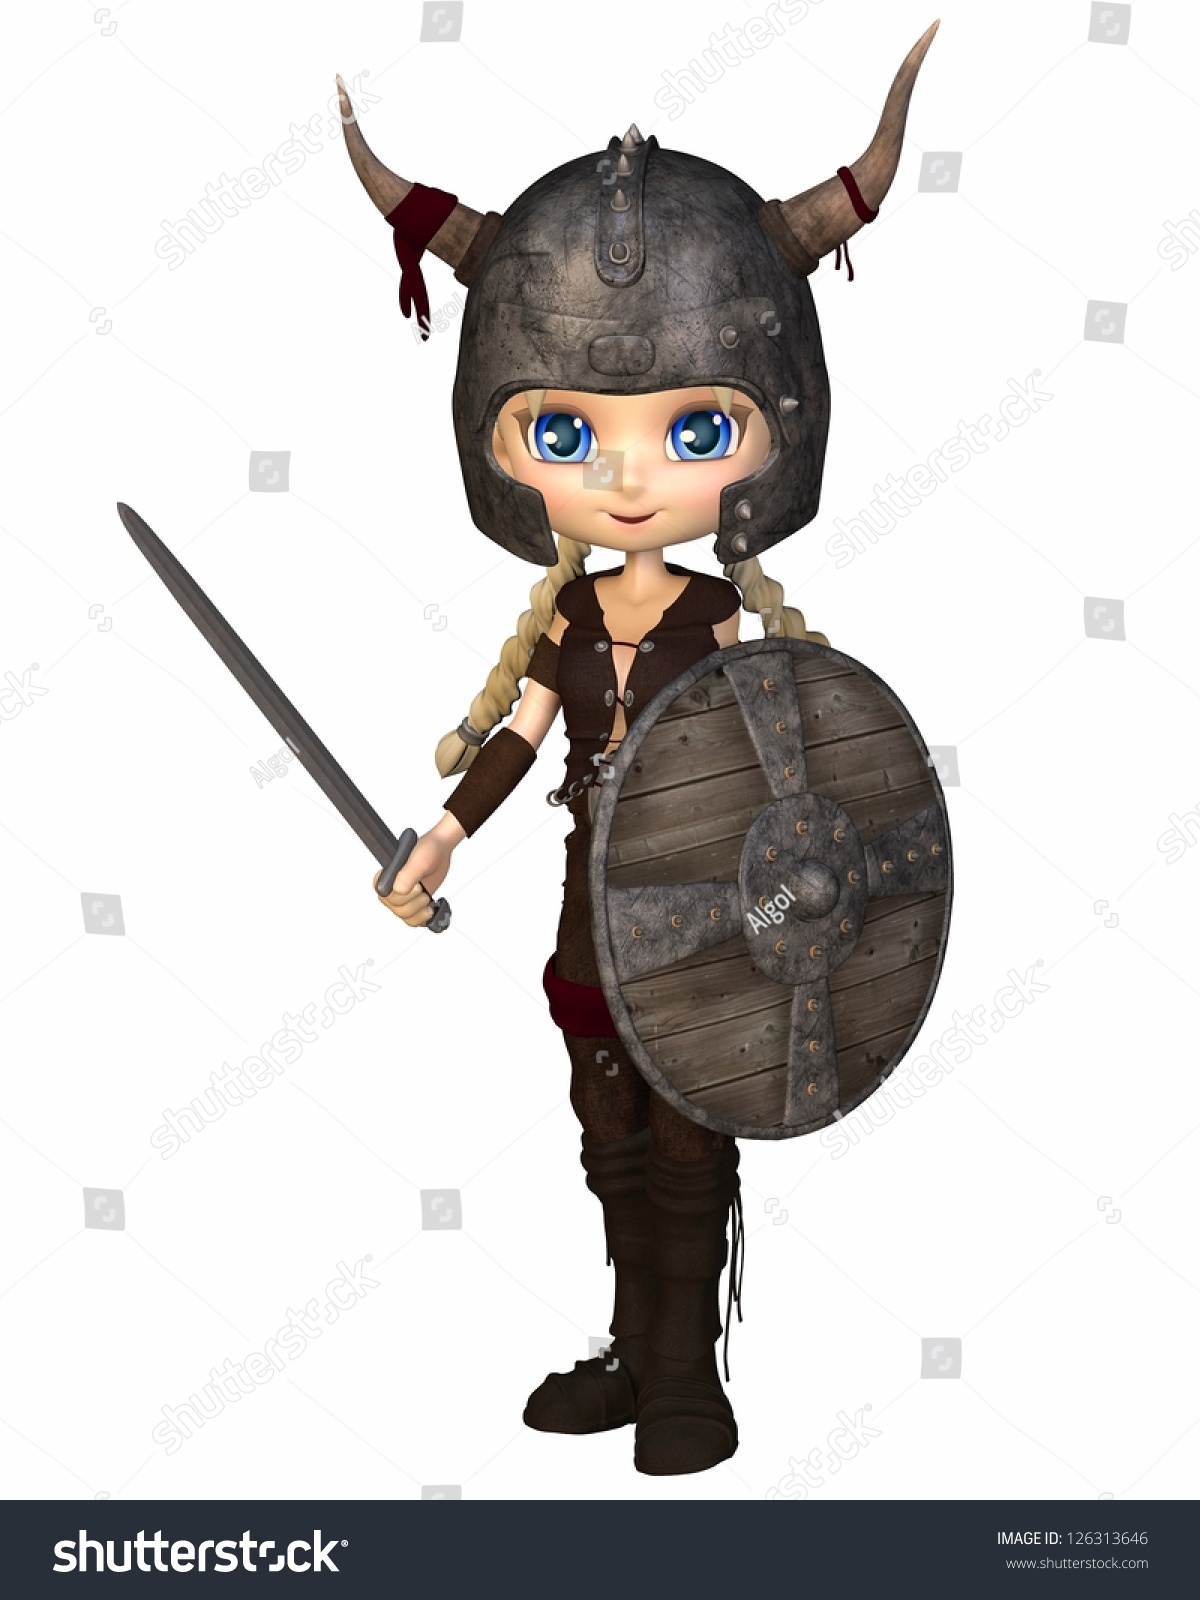 Cute Toon Style Viking Warrior Girl Stock Illustration ...